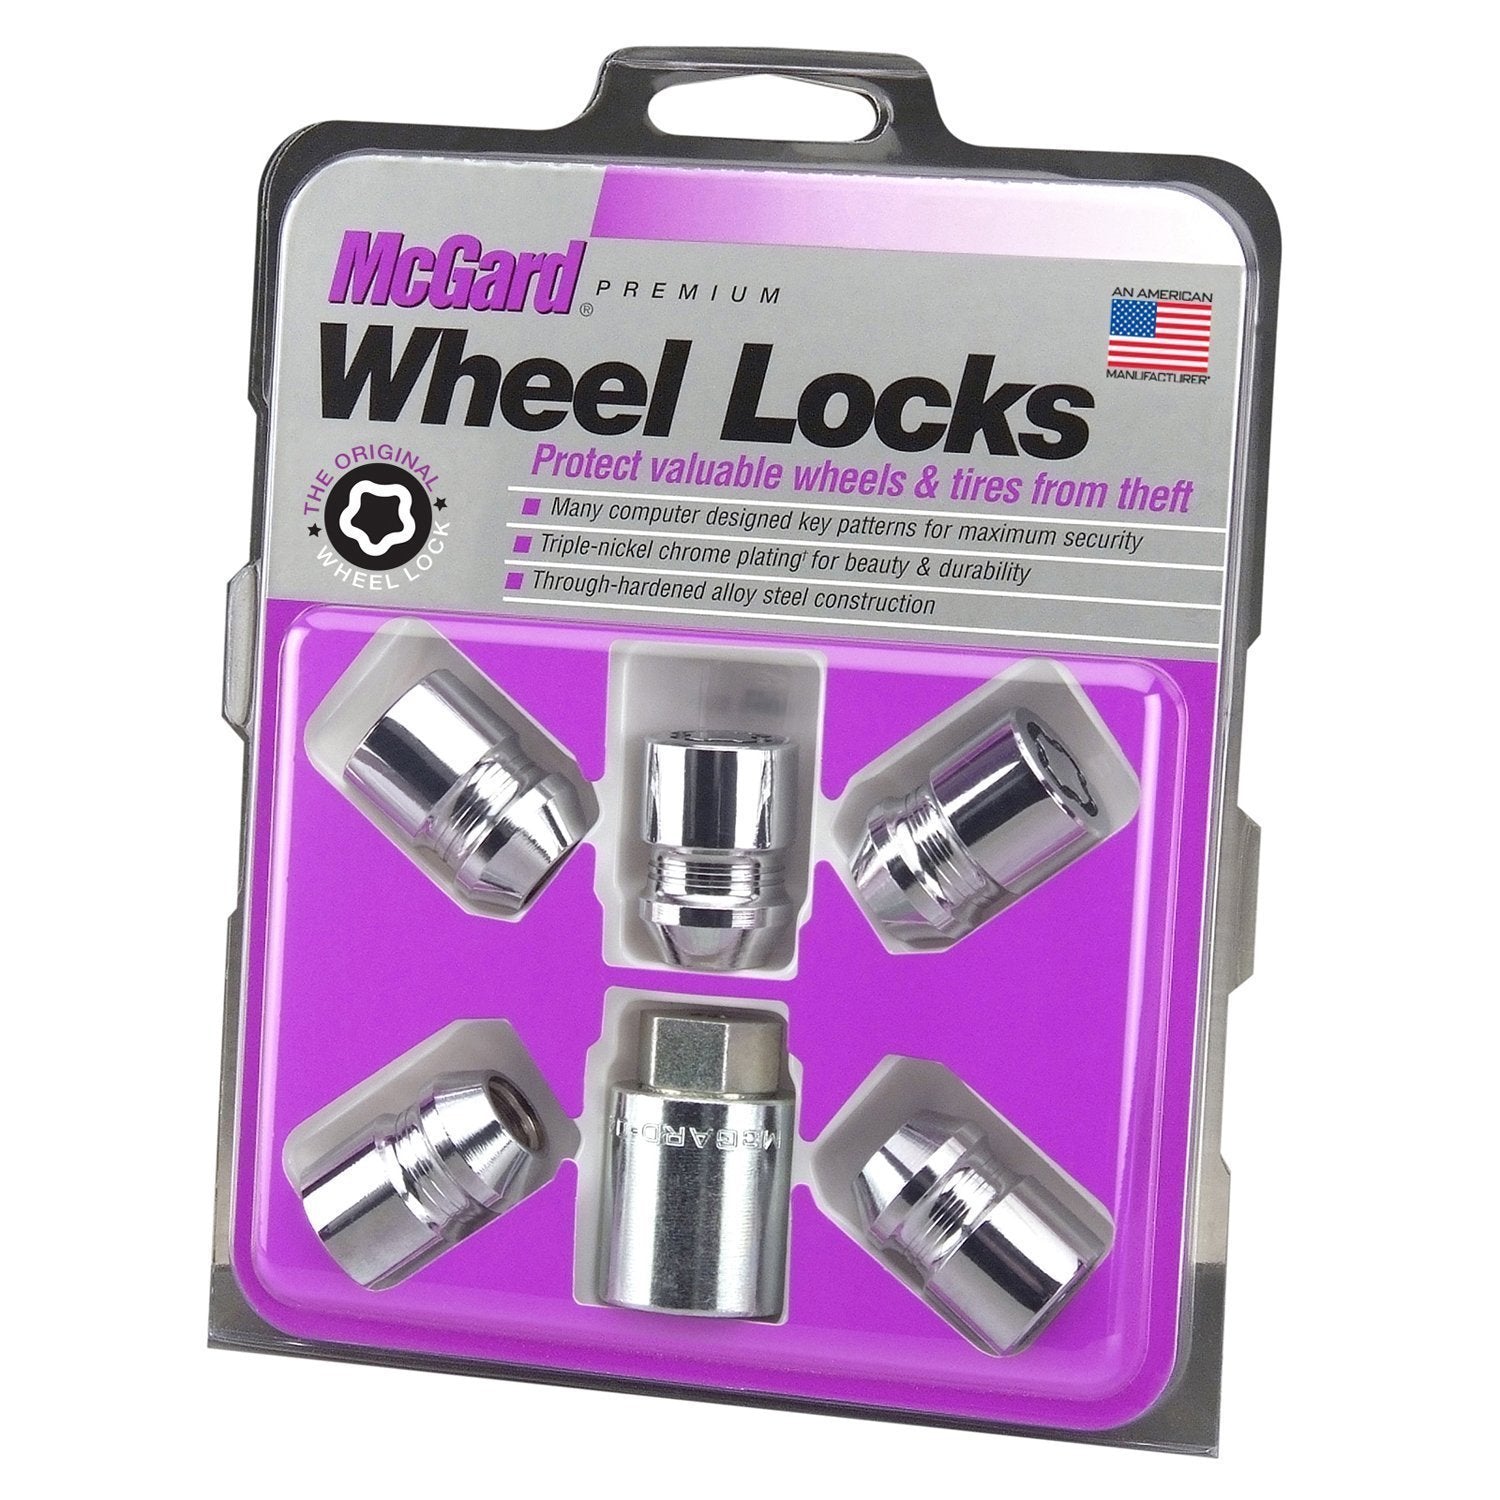 McGard, McGard Cone Seat Exposed Style Wheel Locks / Chrome / 5 Lock Set (24552)